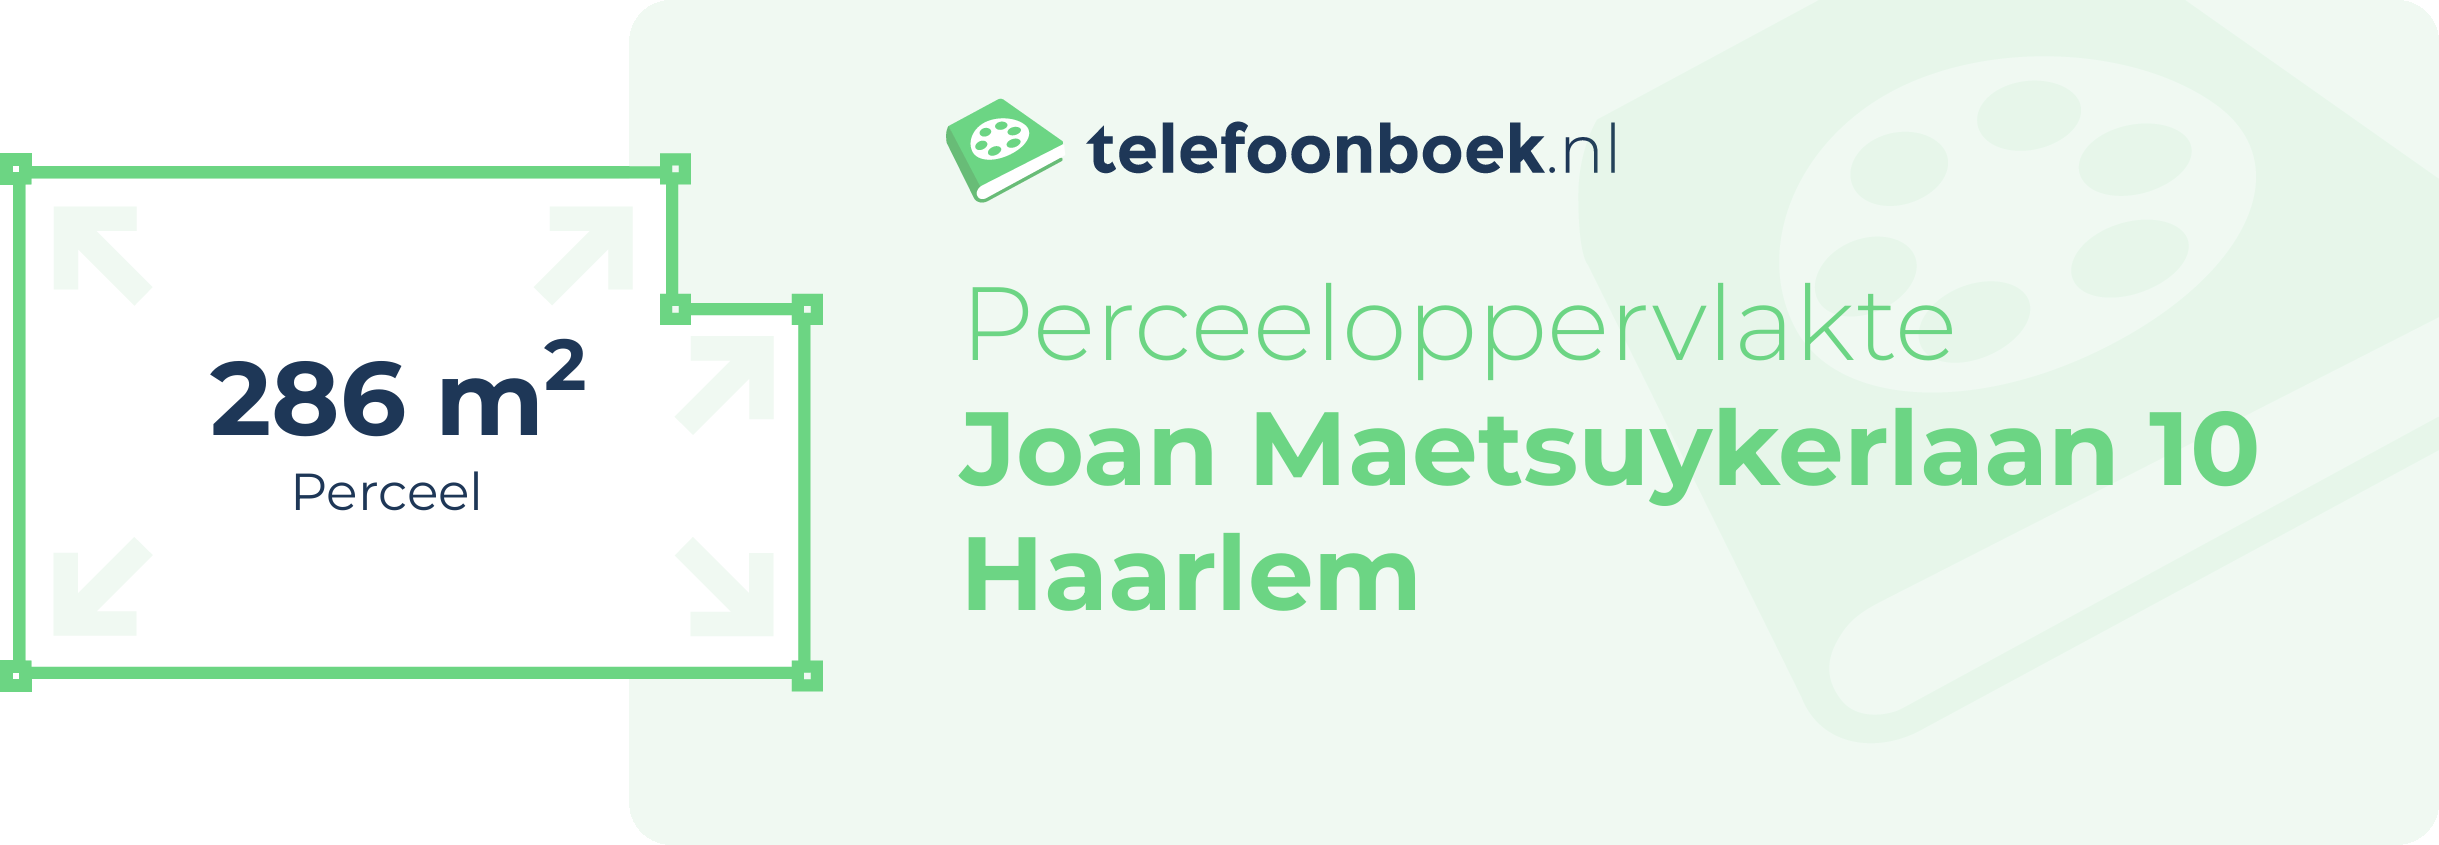 Perceeloppervlakte Joan Maetsuykerlaan 10 Haarlem